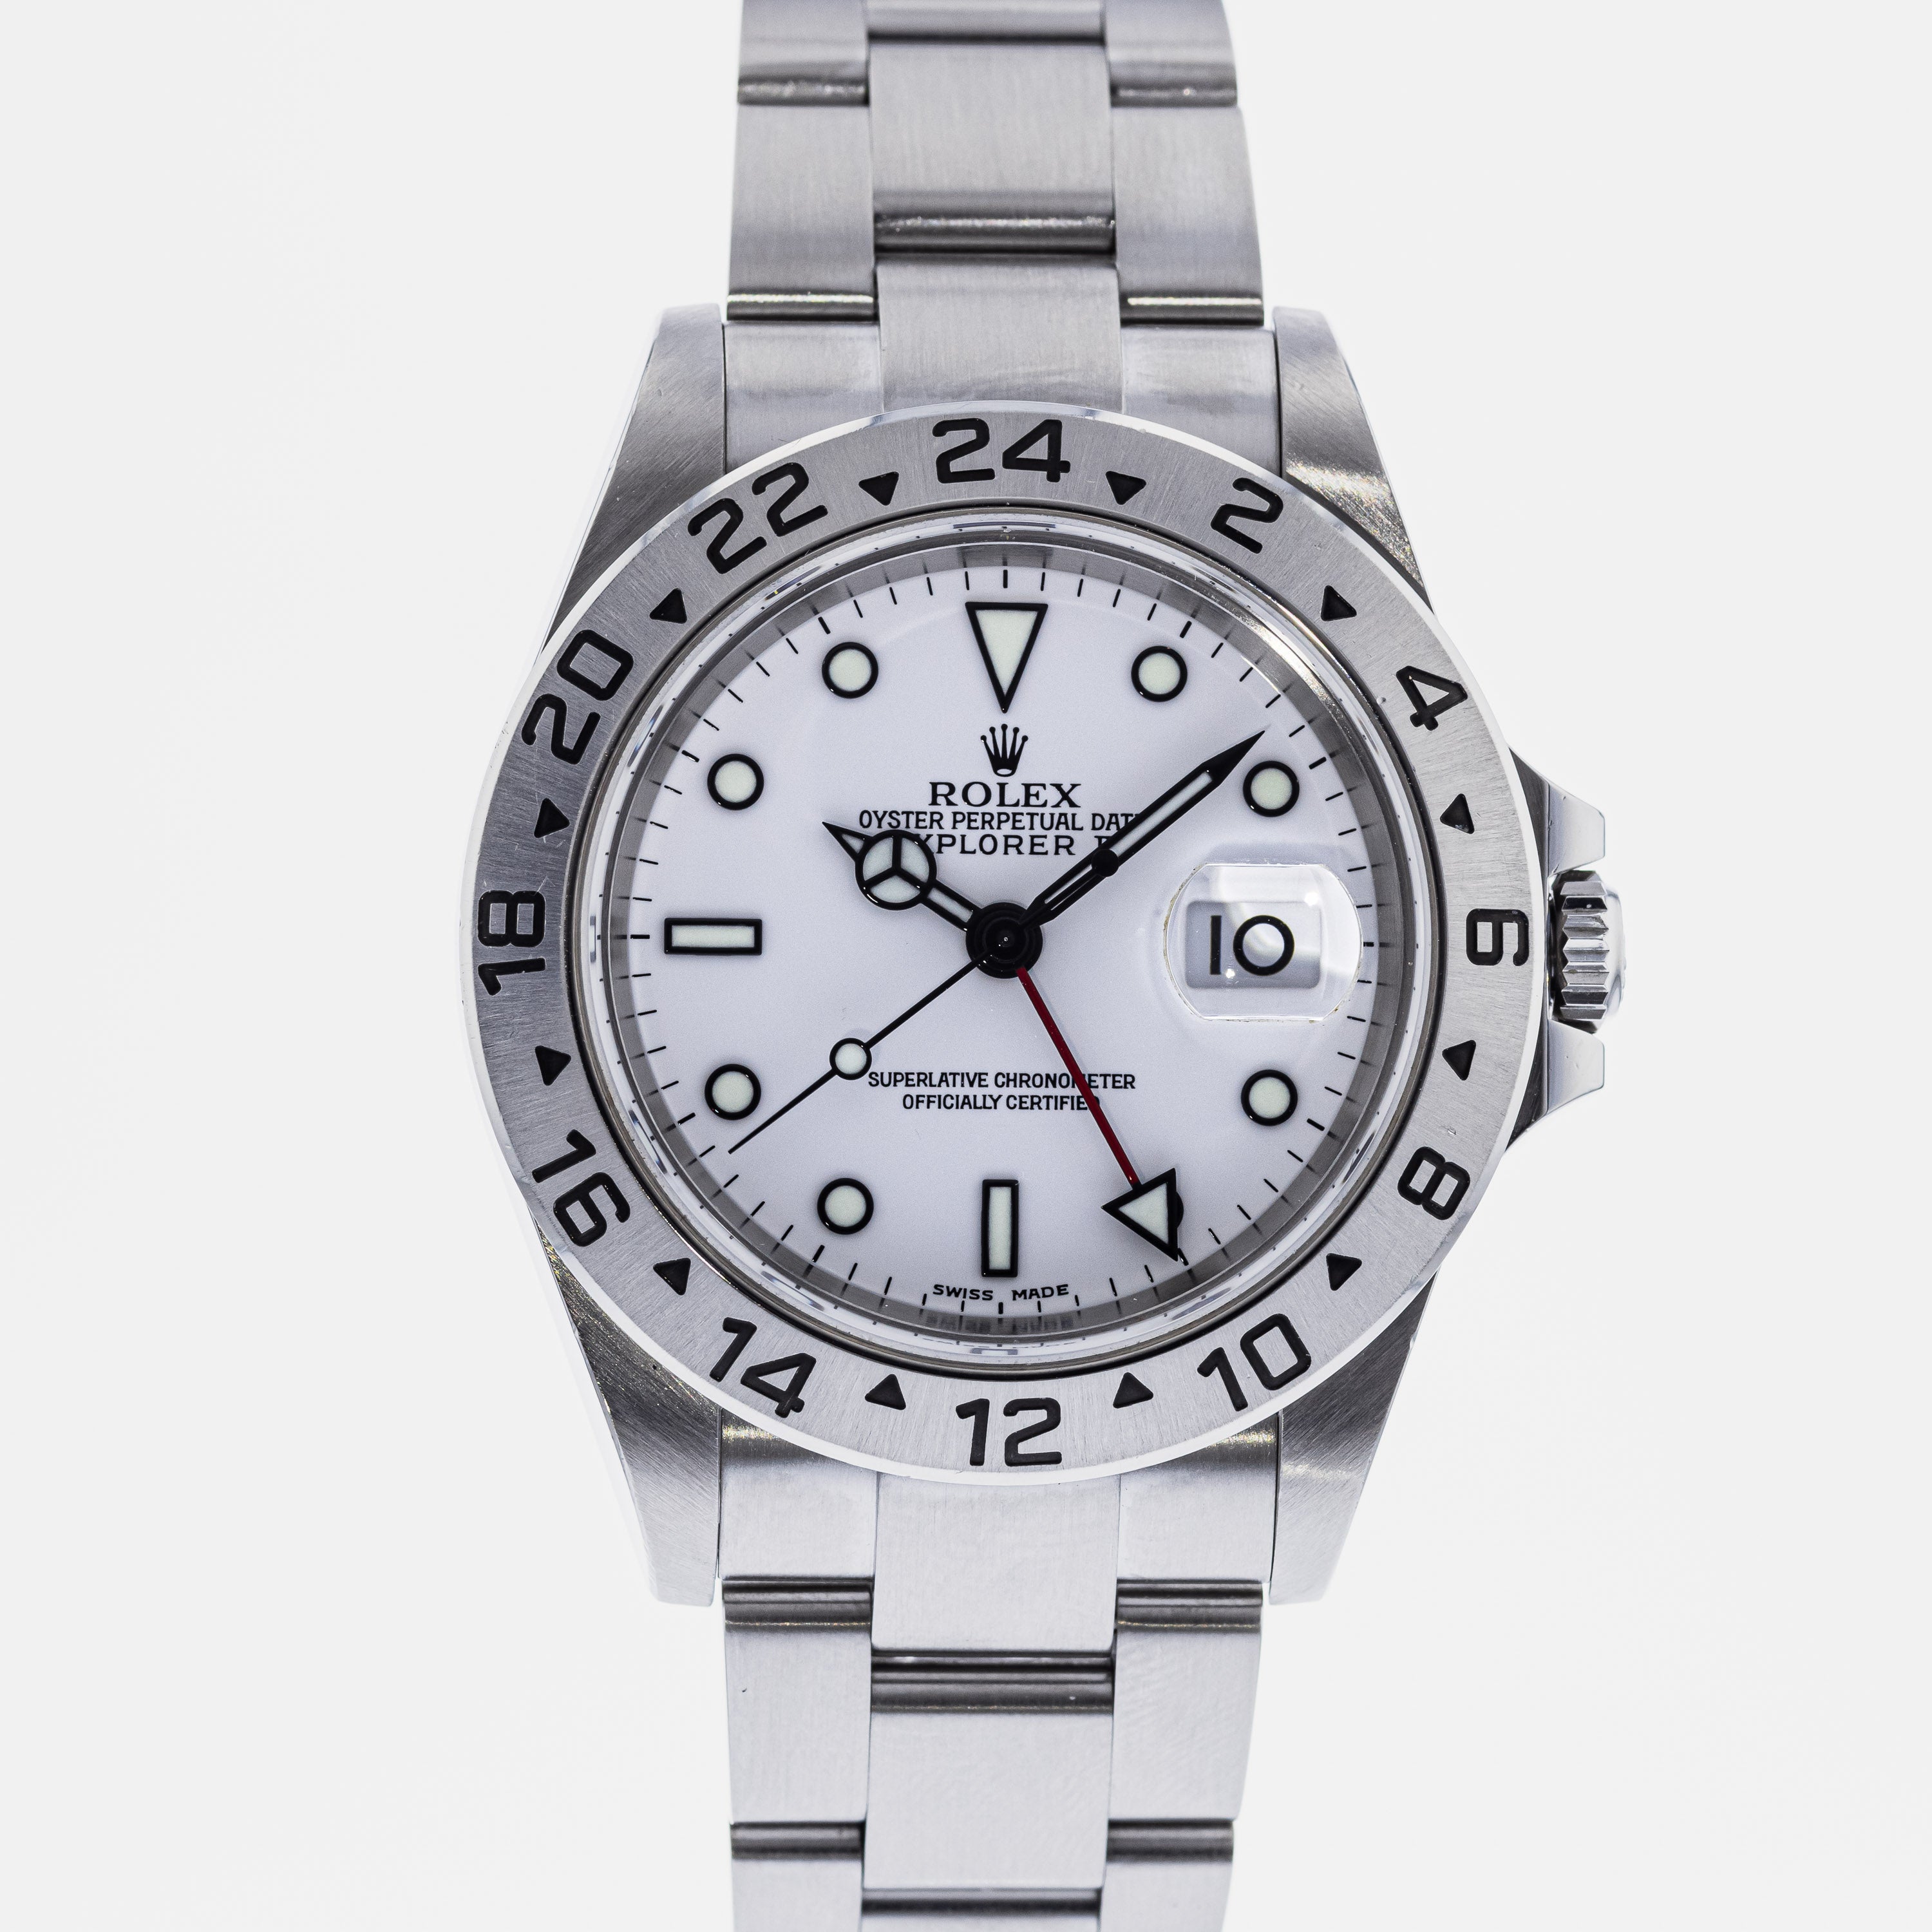 Authentic Used Explorer II 16570 Watch (10-10-ROL-XZYPMU)